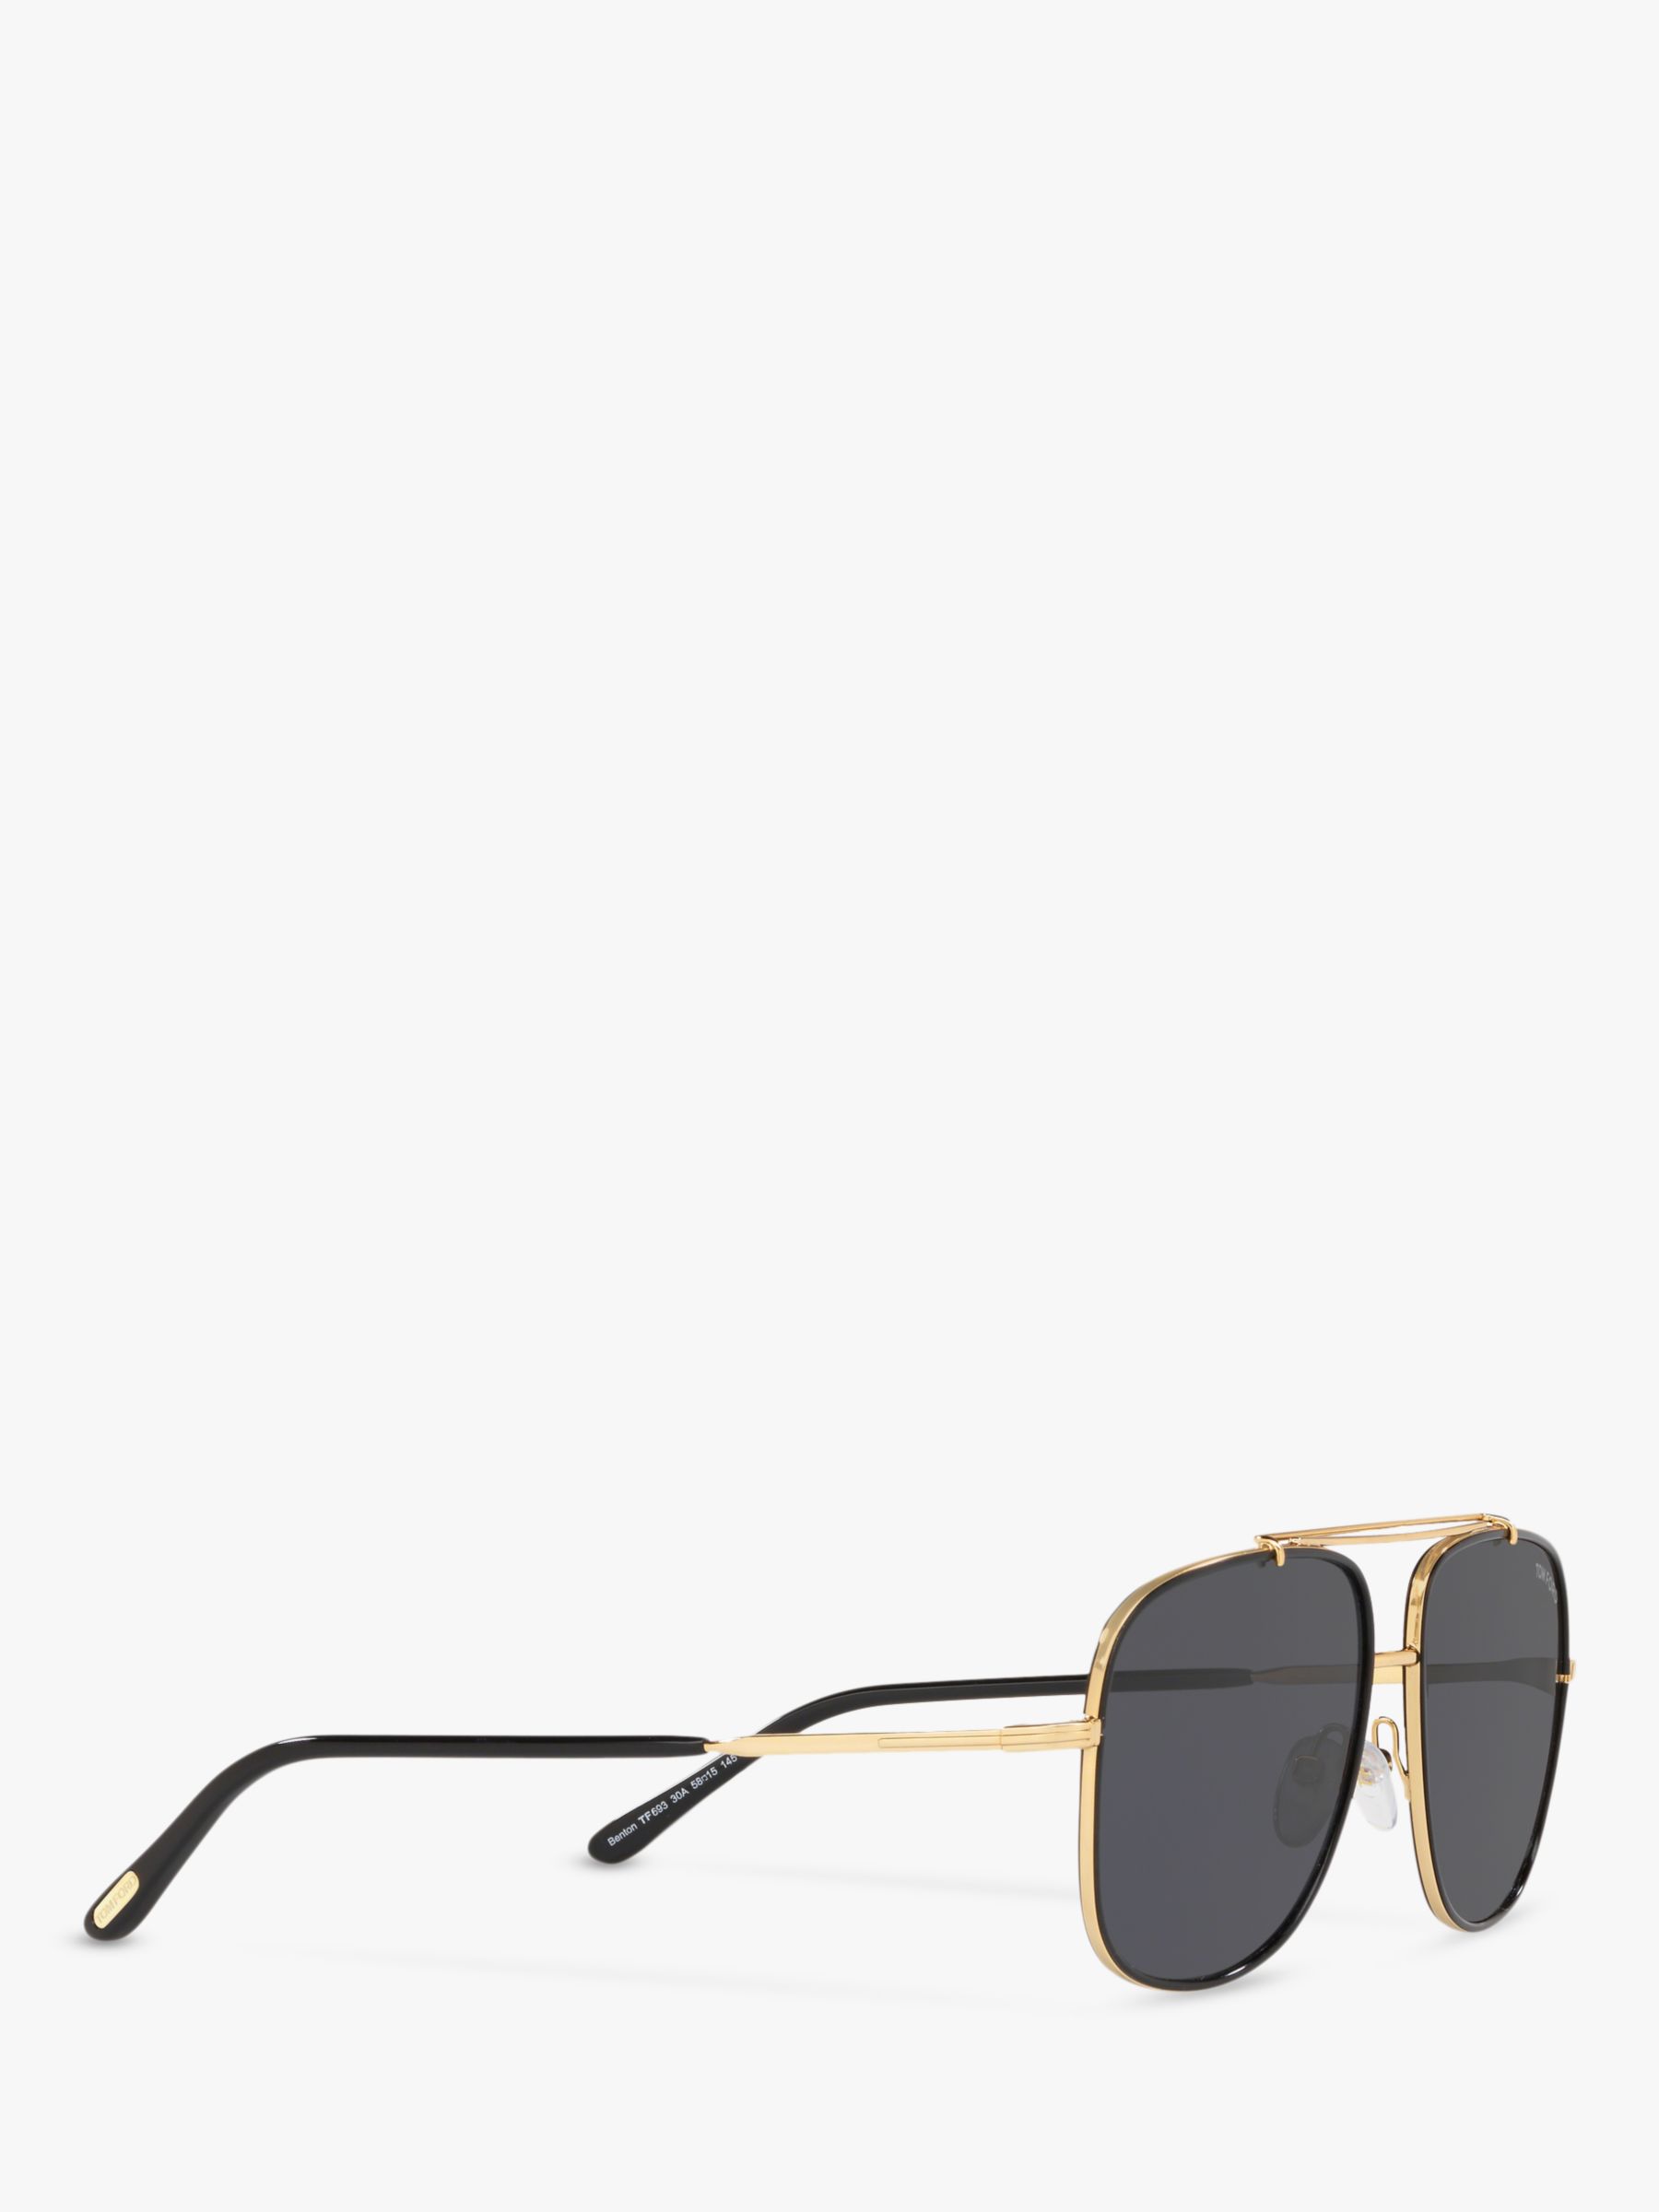 TOM FORD FT0693 Men's Benton Square Sunglasses, Gold/Black at John Lewis &  Partners